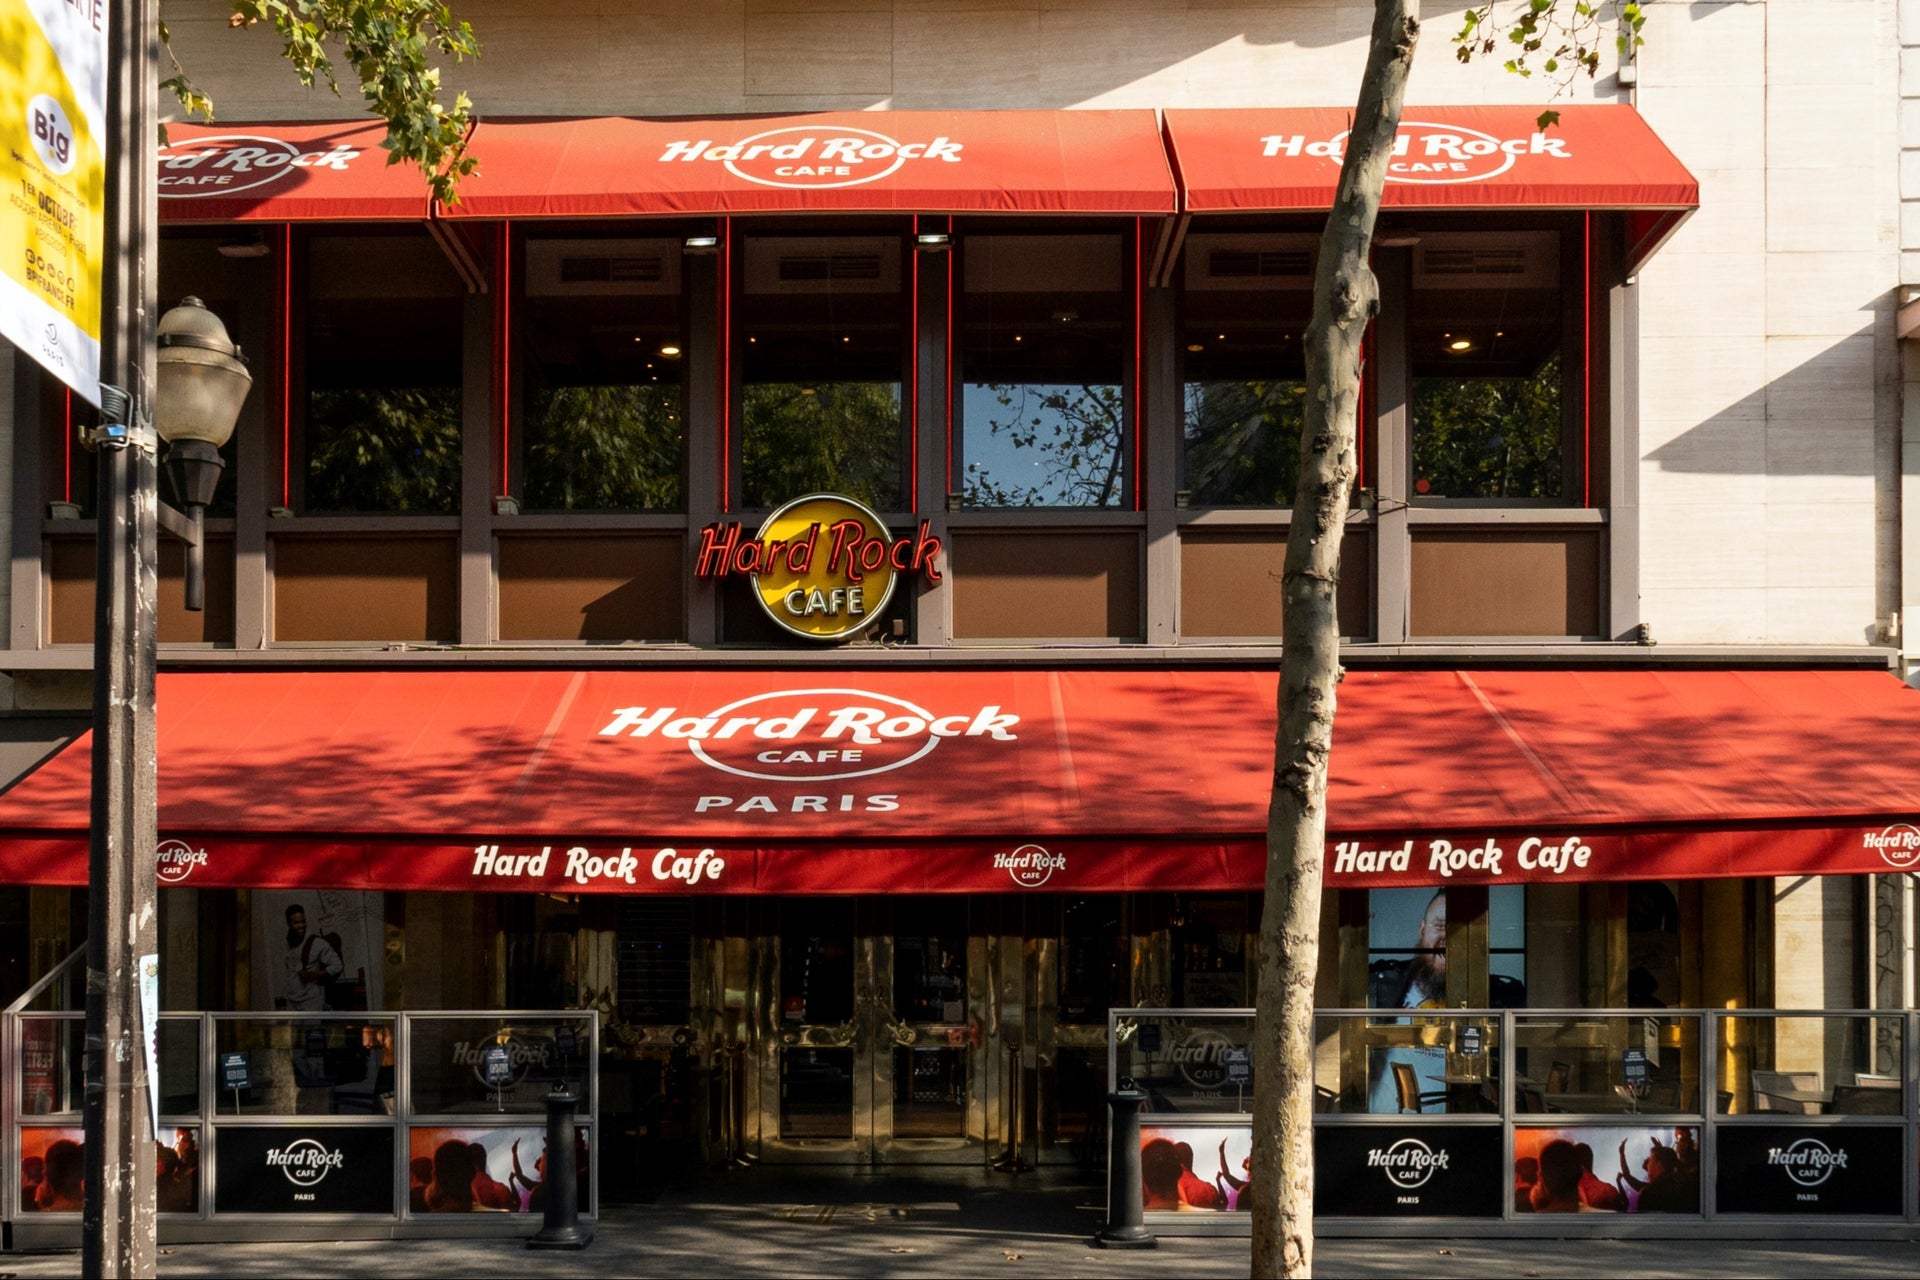 Hard Rock Cafe Paris sem filas